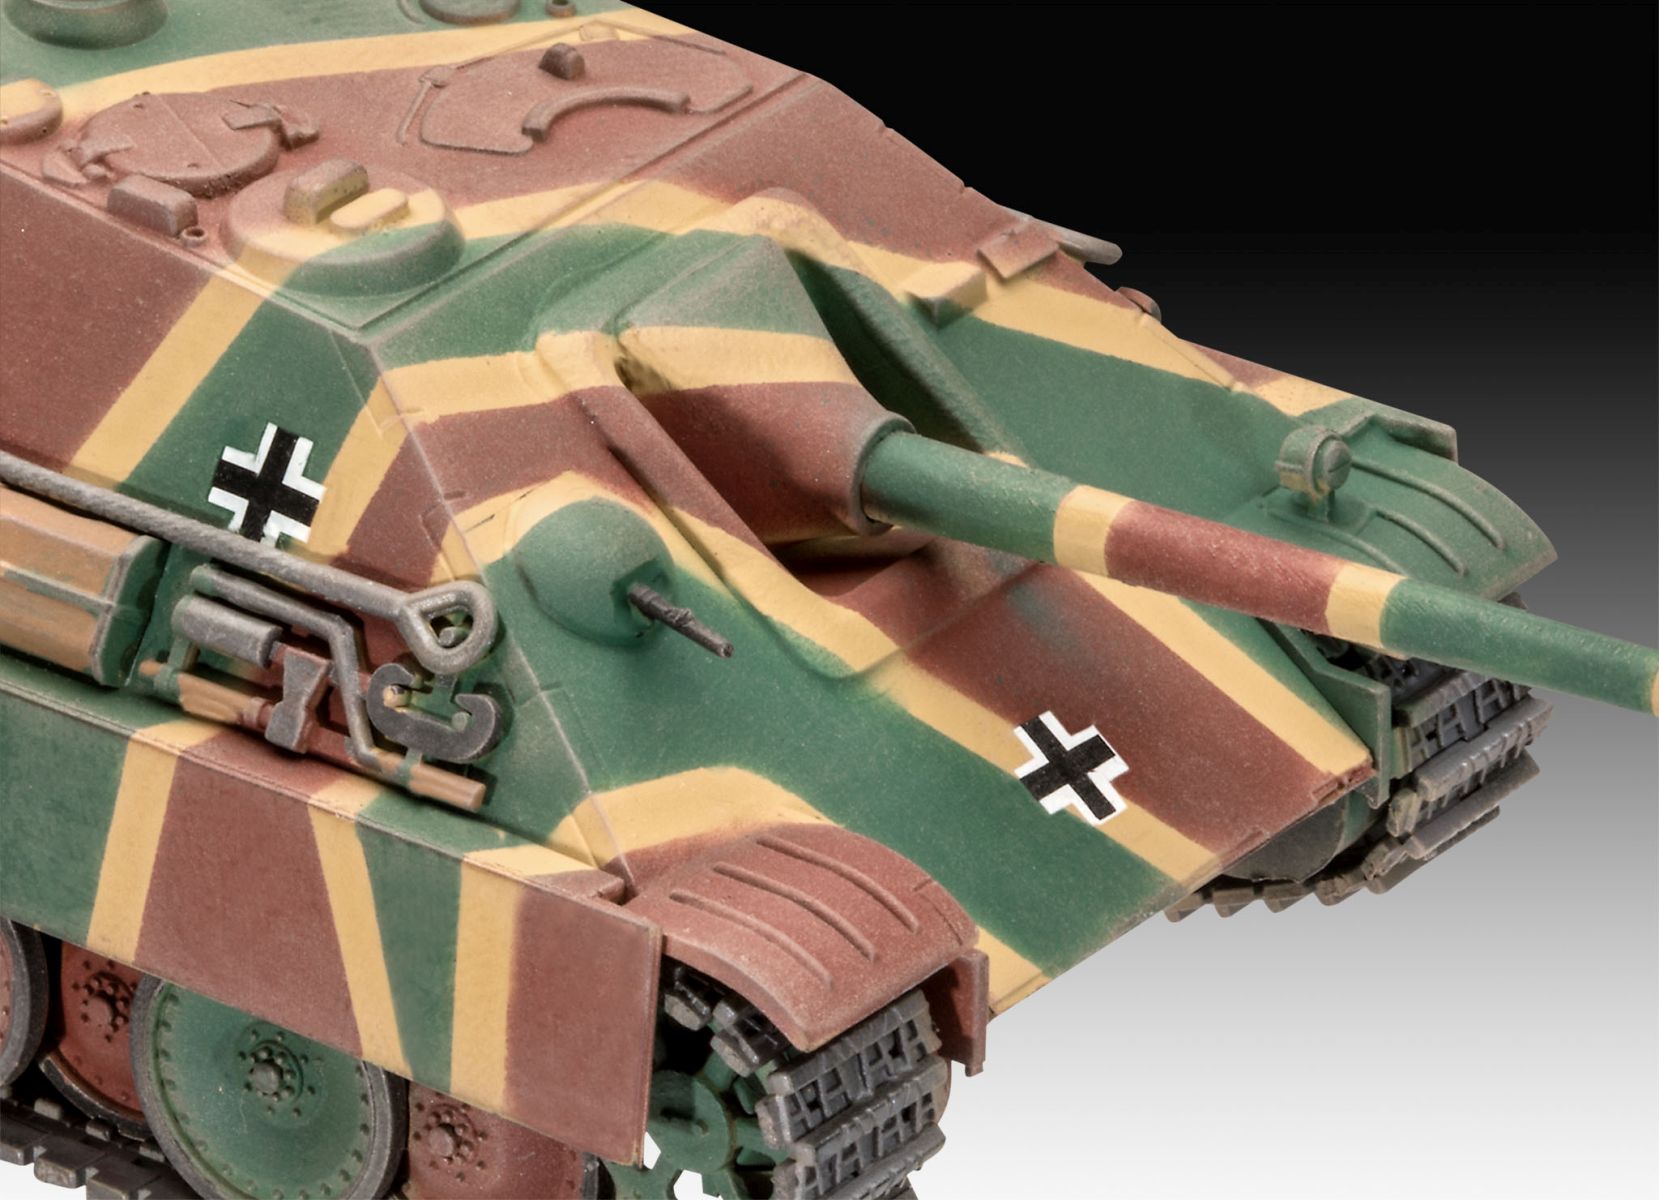 Revell 03327 - Jagdpanther Sd.Kfz.173